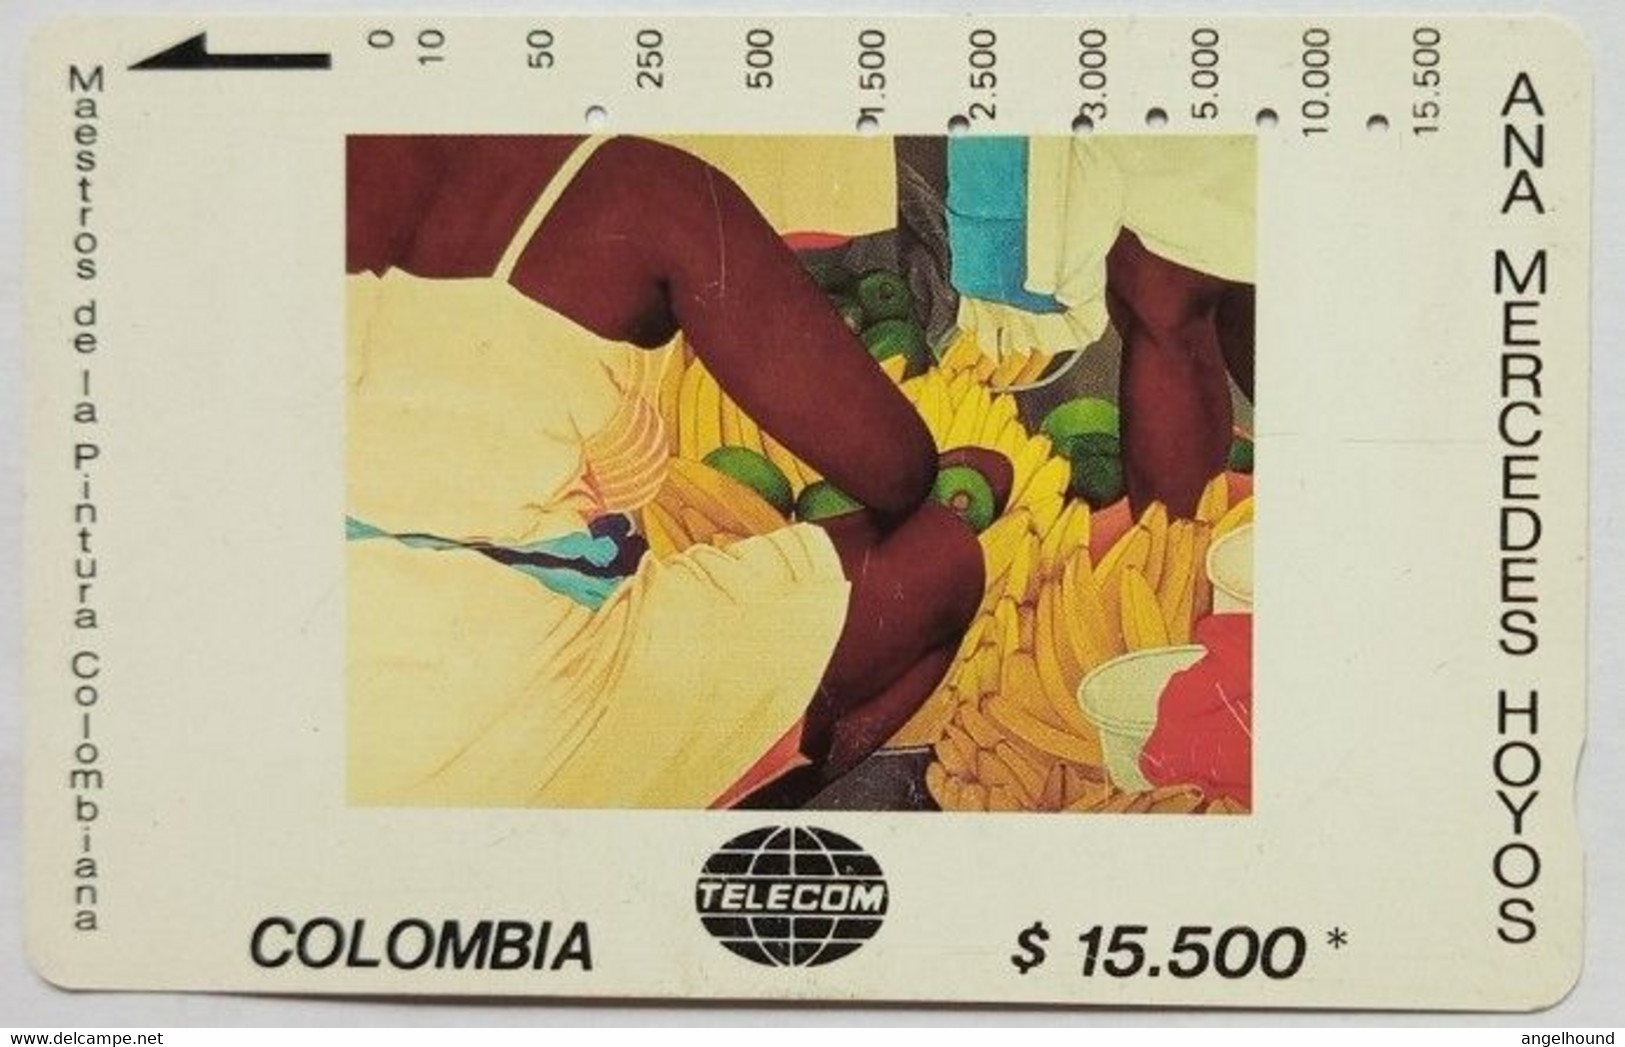 Colombia $15,500 Ana Mercedes Hoyos "Bazurto" - Kolumbien